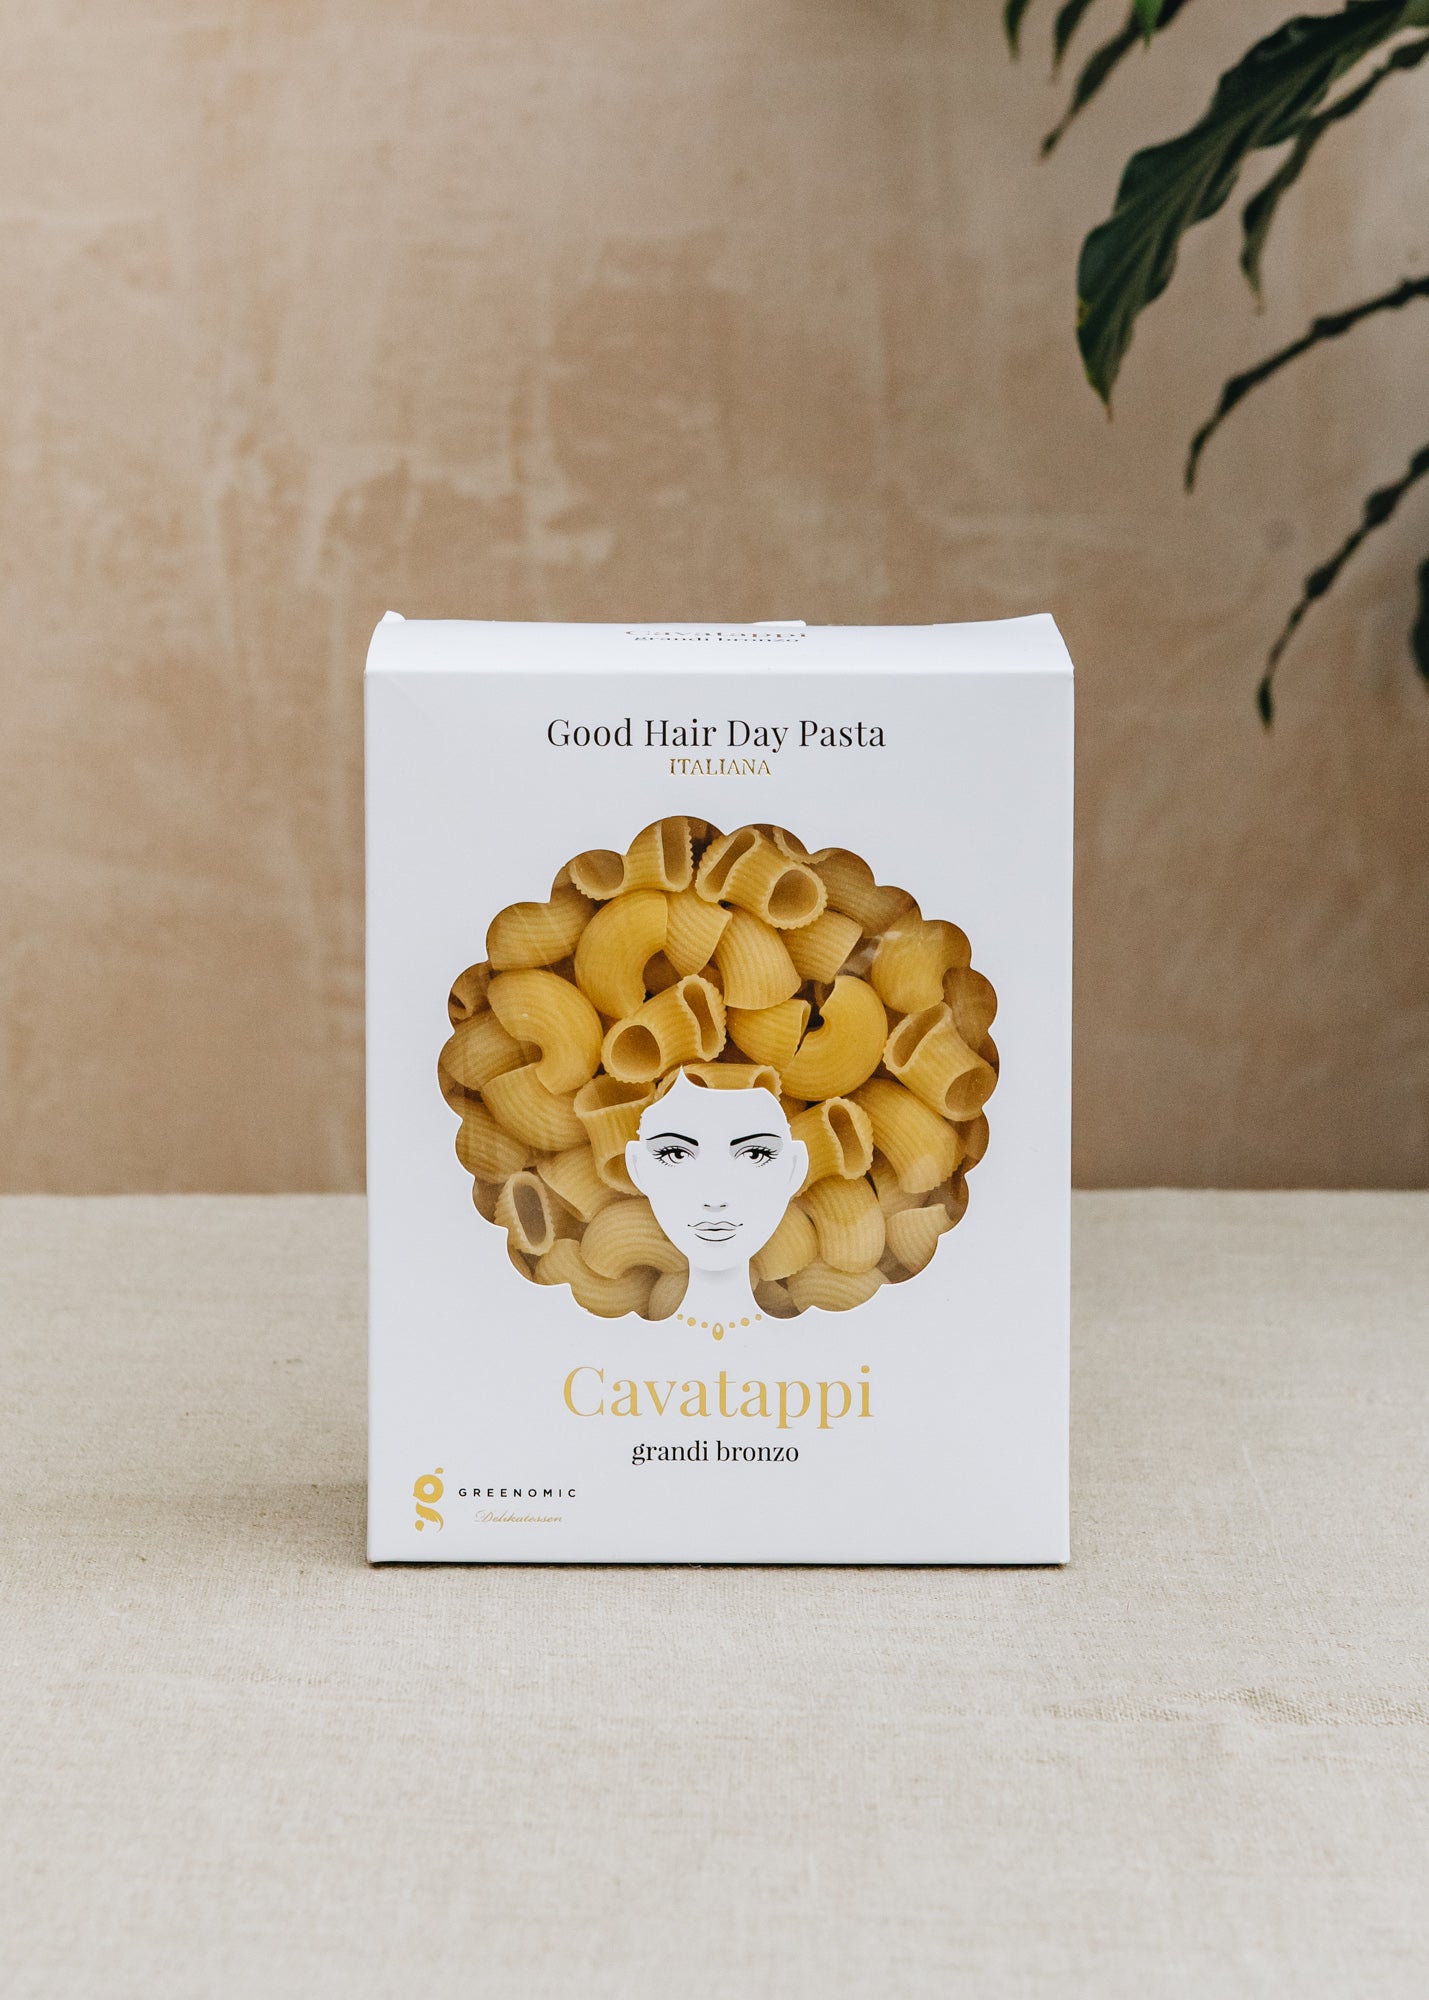 Good Hair Day Pasta - Cavatappi Grandi Bronzo